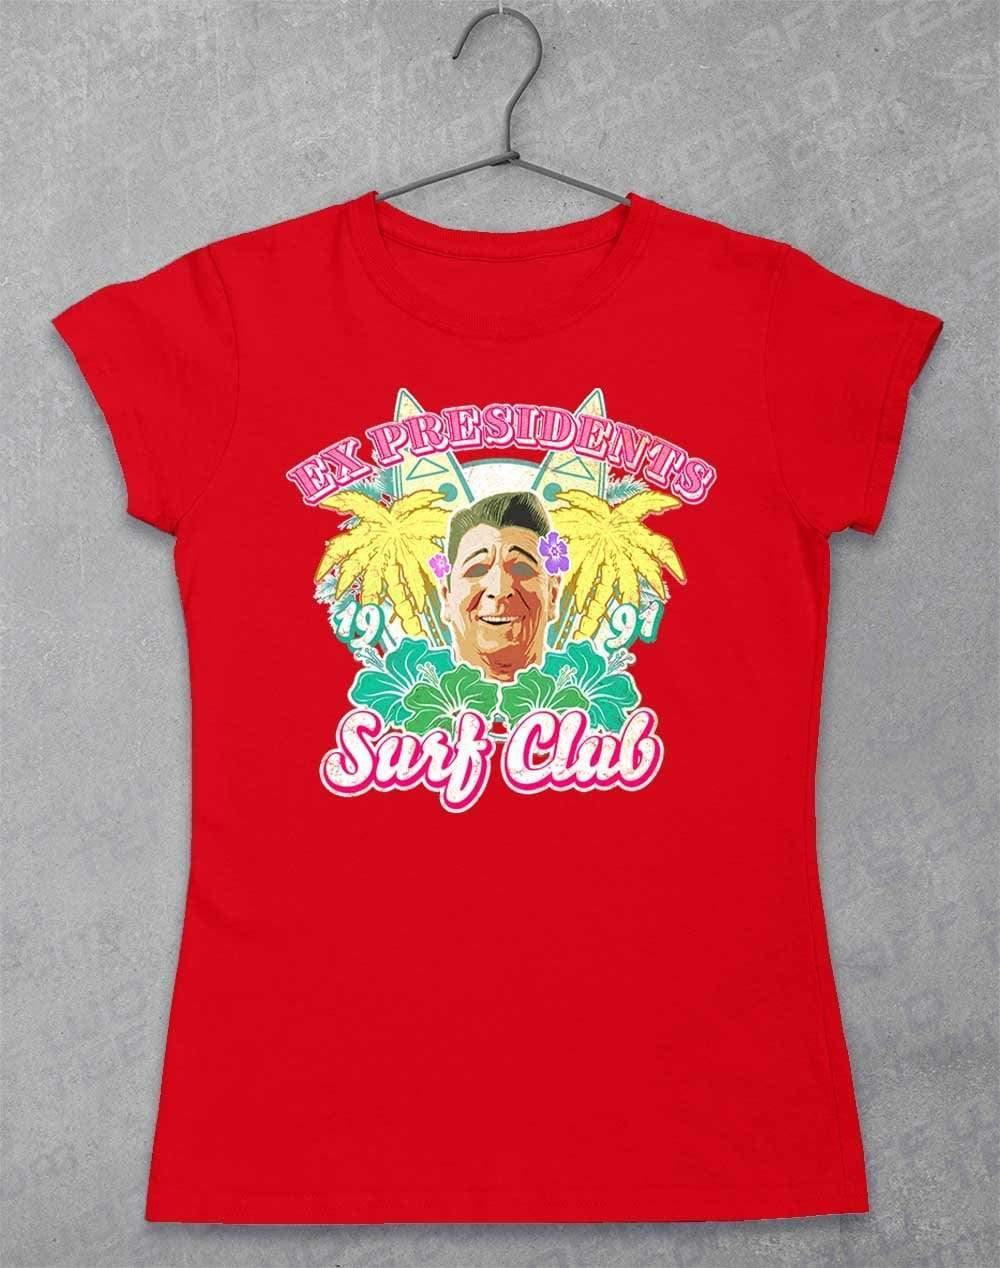 Ex Presidents Surf Club Womens T-Shirt 8-10 / Red  - Off World Tees